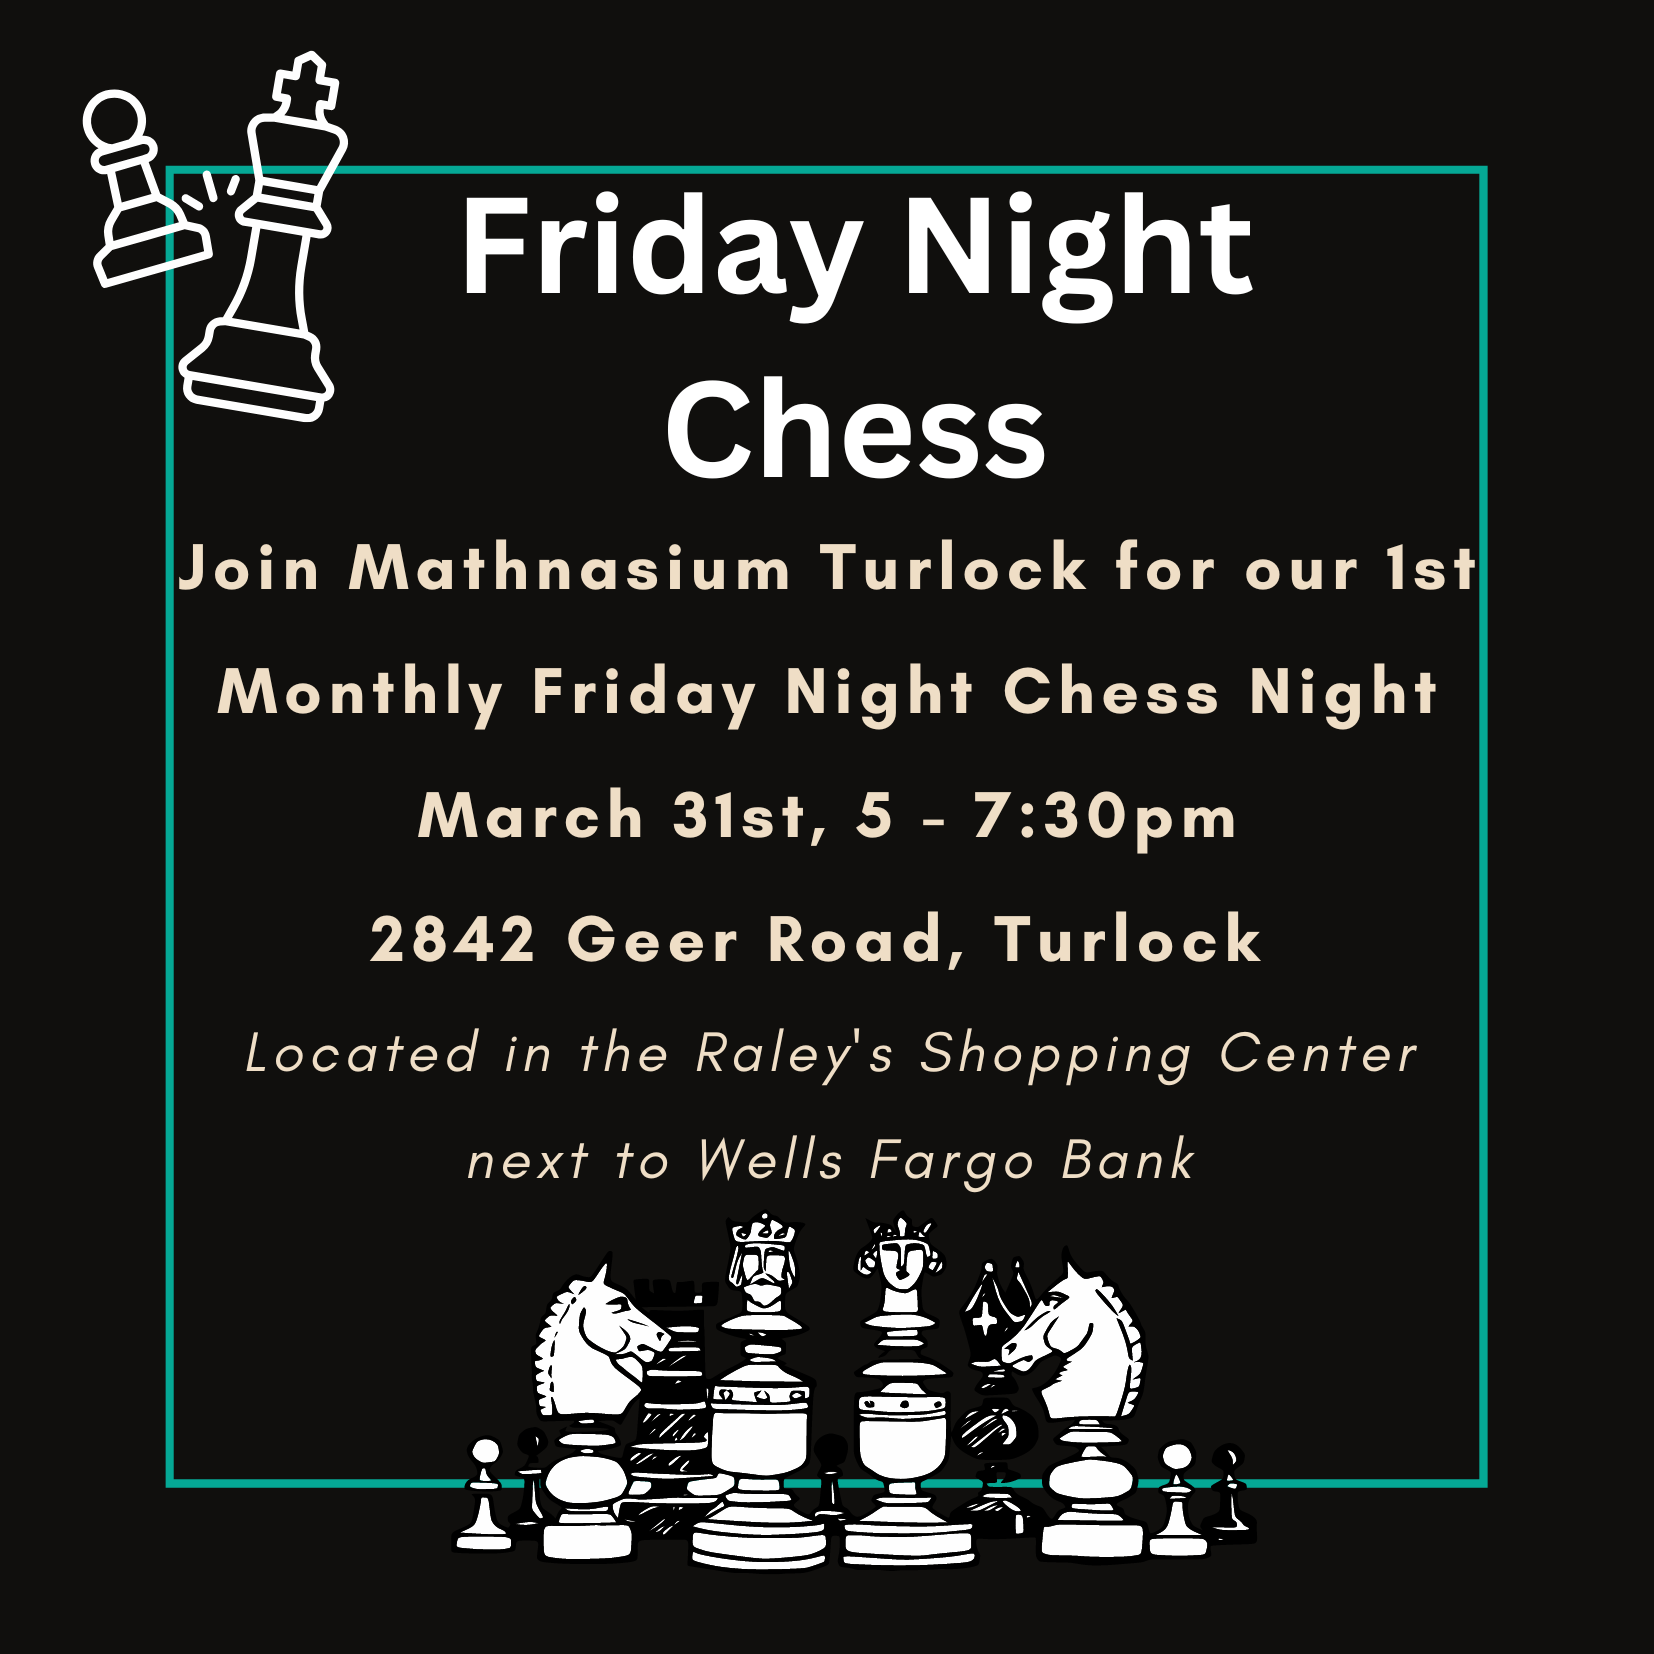 Mathnasium Turlock Friday Night Chess Night Invitation.png